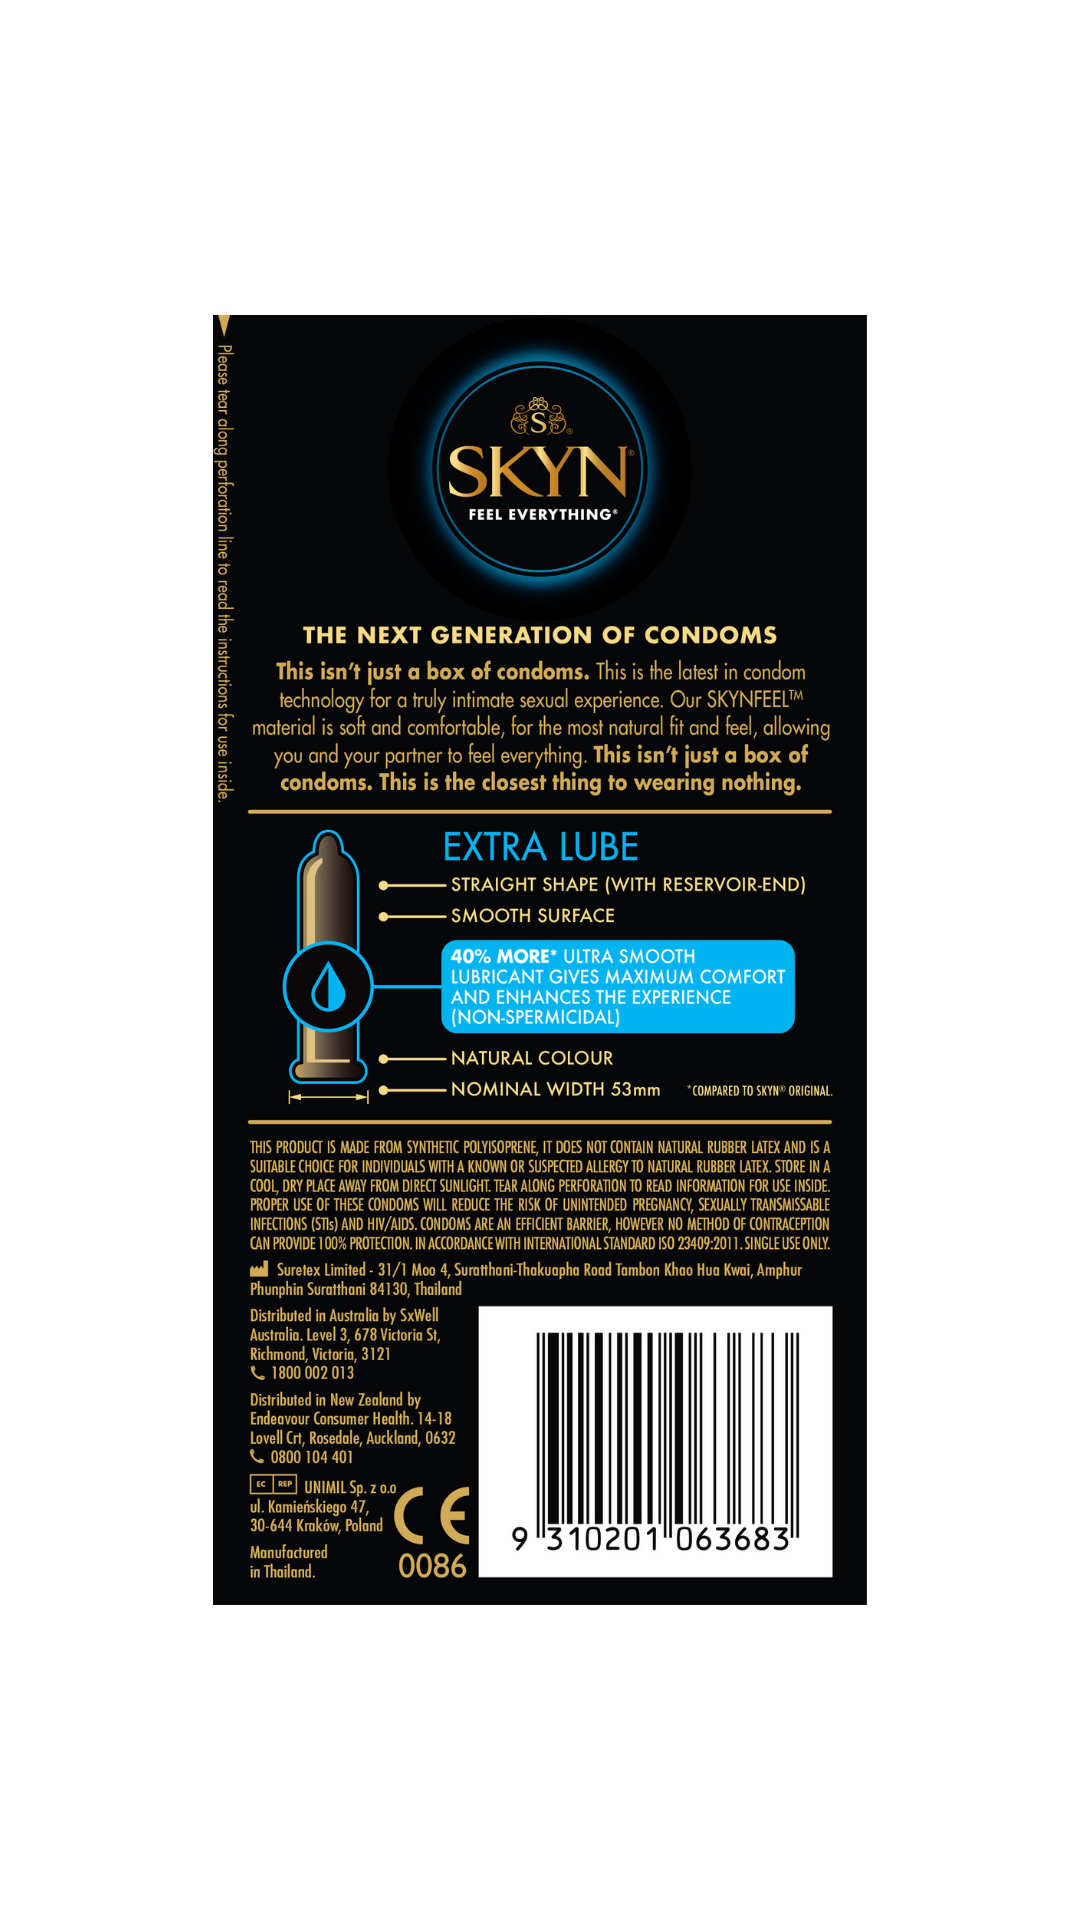 SKYN® Extra Lube Condoms 60 + Natural Harmony 80ml